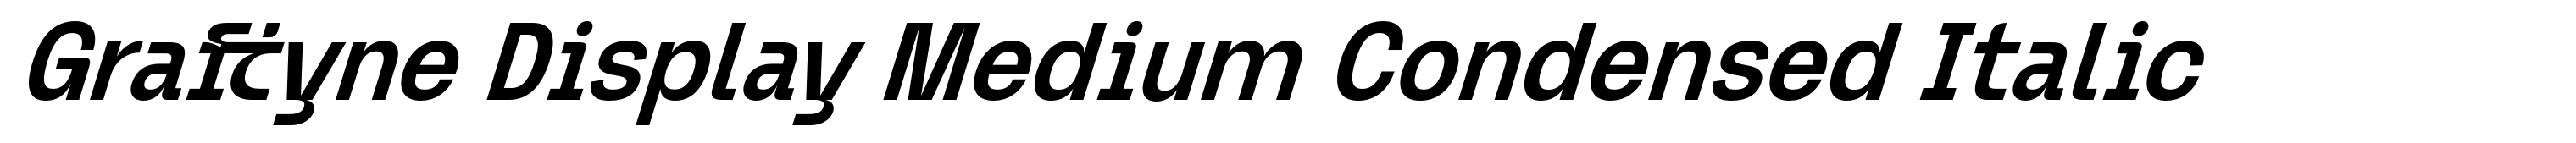 Graftyne Display Medium Condensed Italic